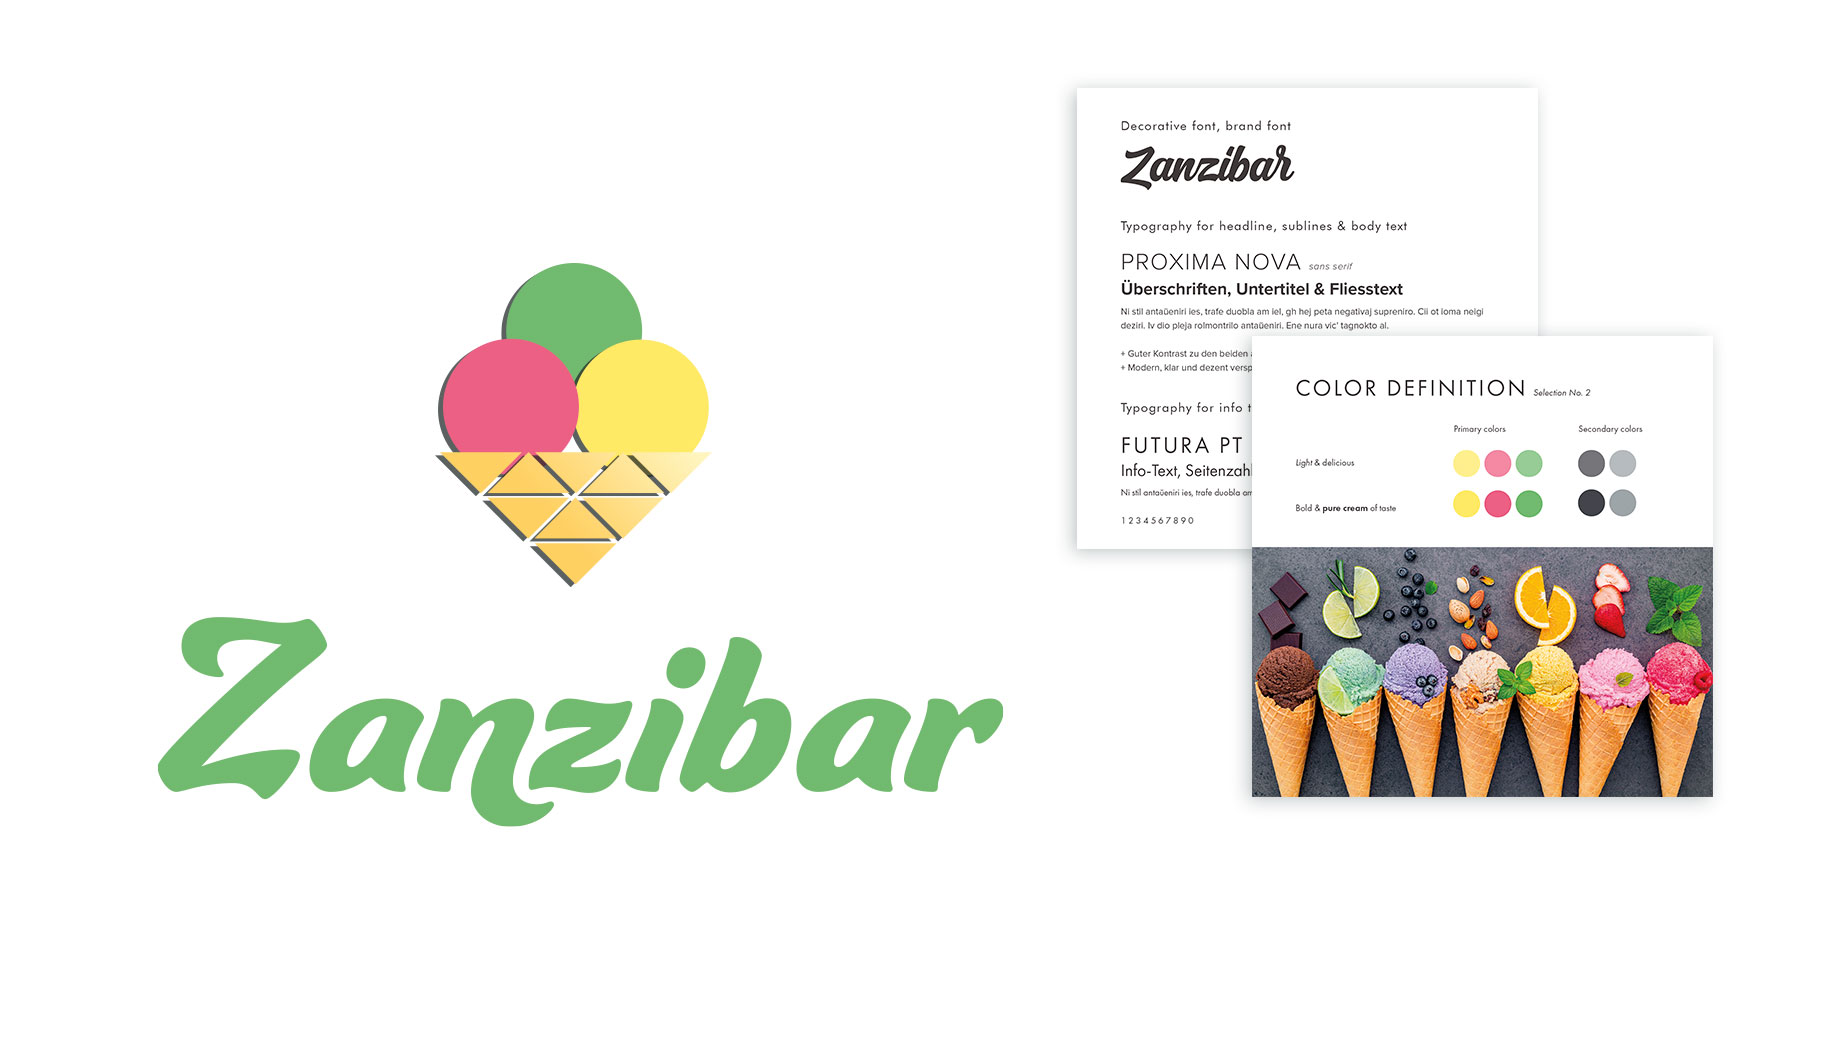 Zanzibar - Art Director - Corporate Identity - Corporate Text and Design - Brand Concept - Final Art